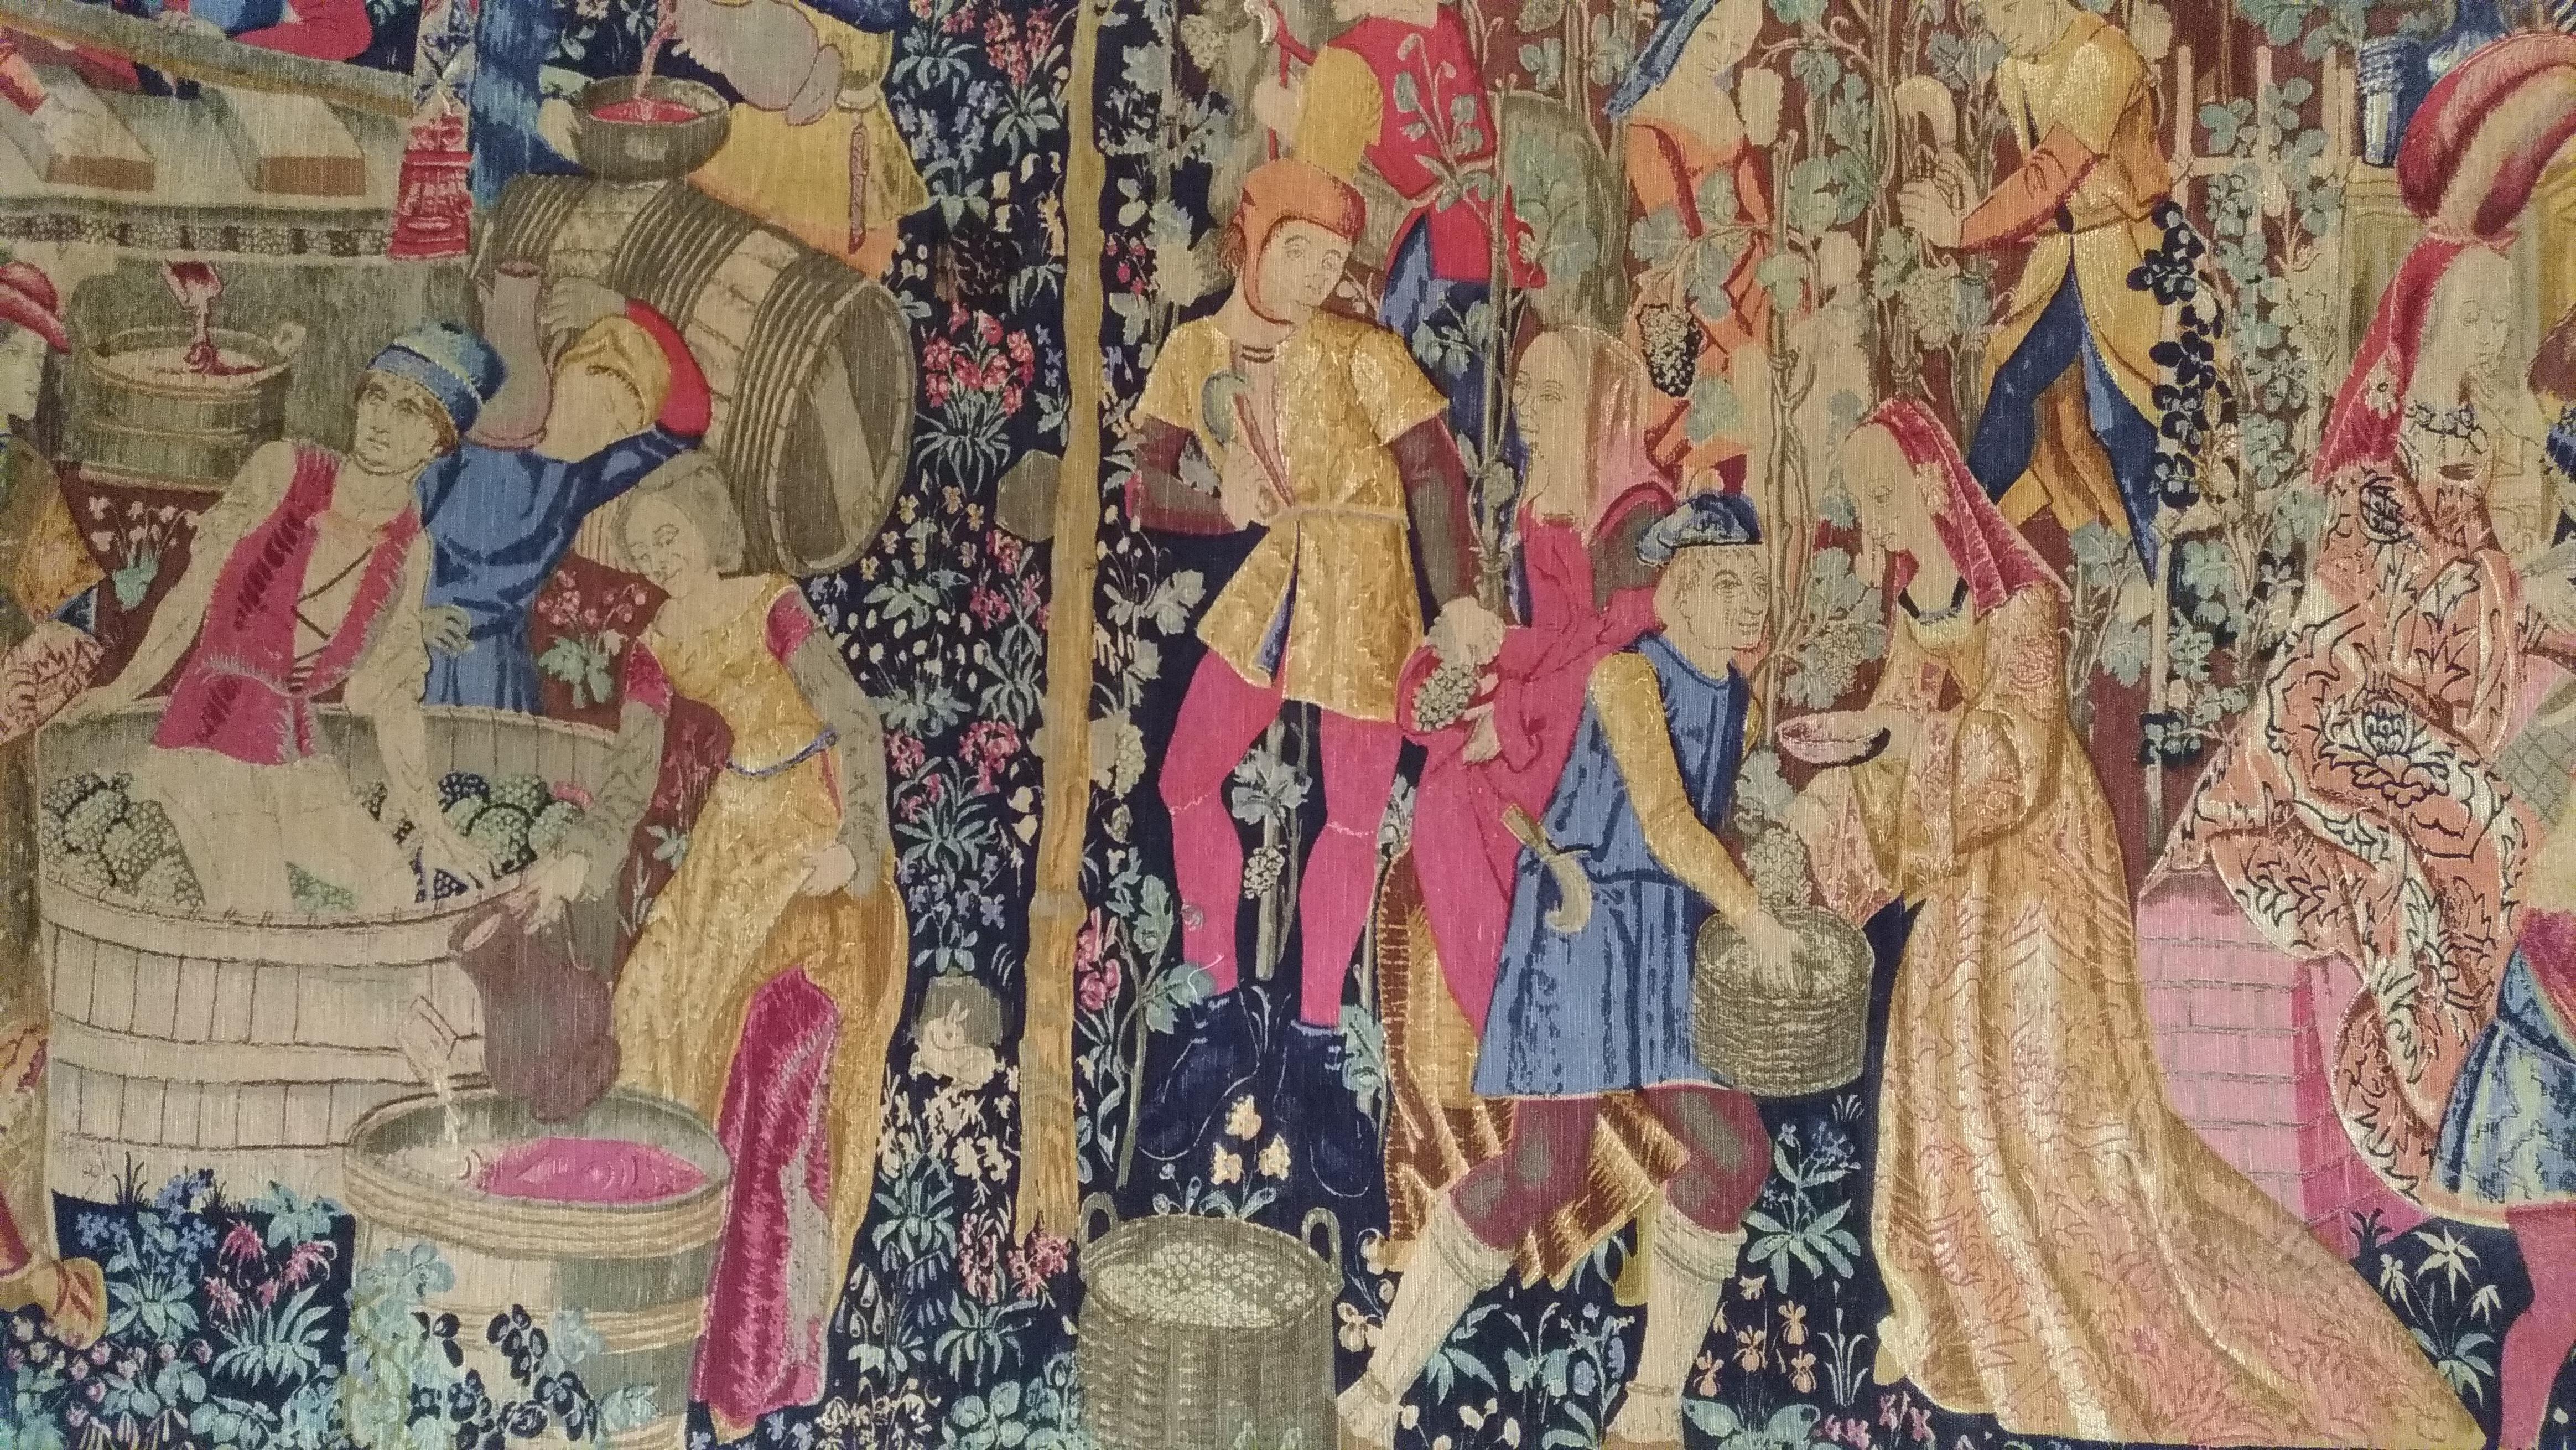  998 - Magnificent Jaquar Tapestry Vintage Aubusson Style Medieval Design 2